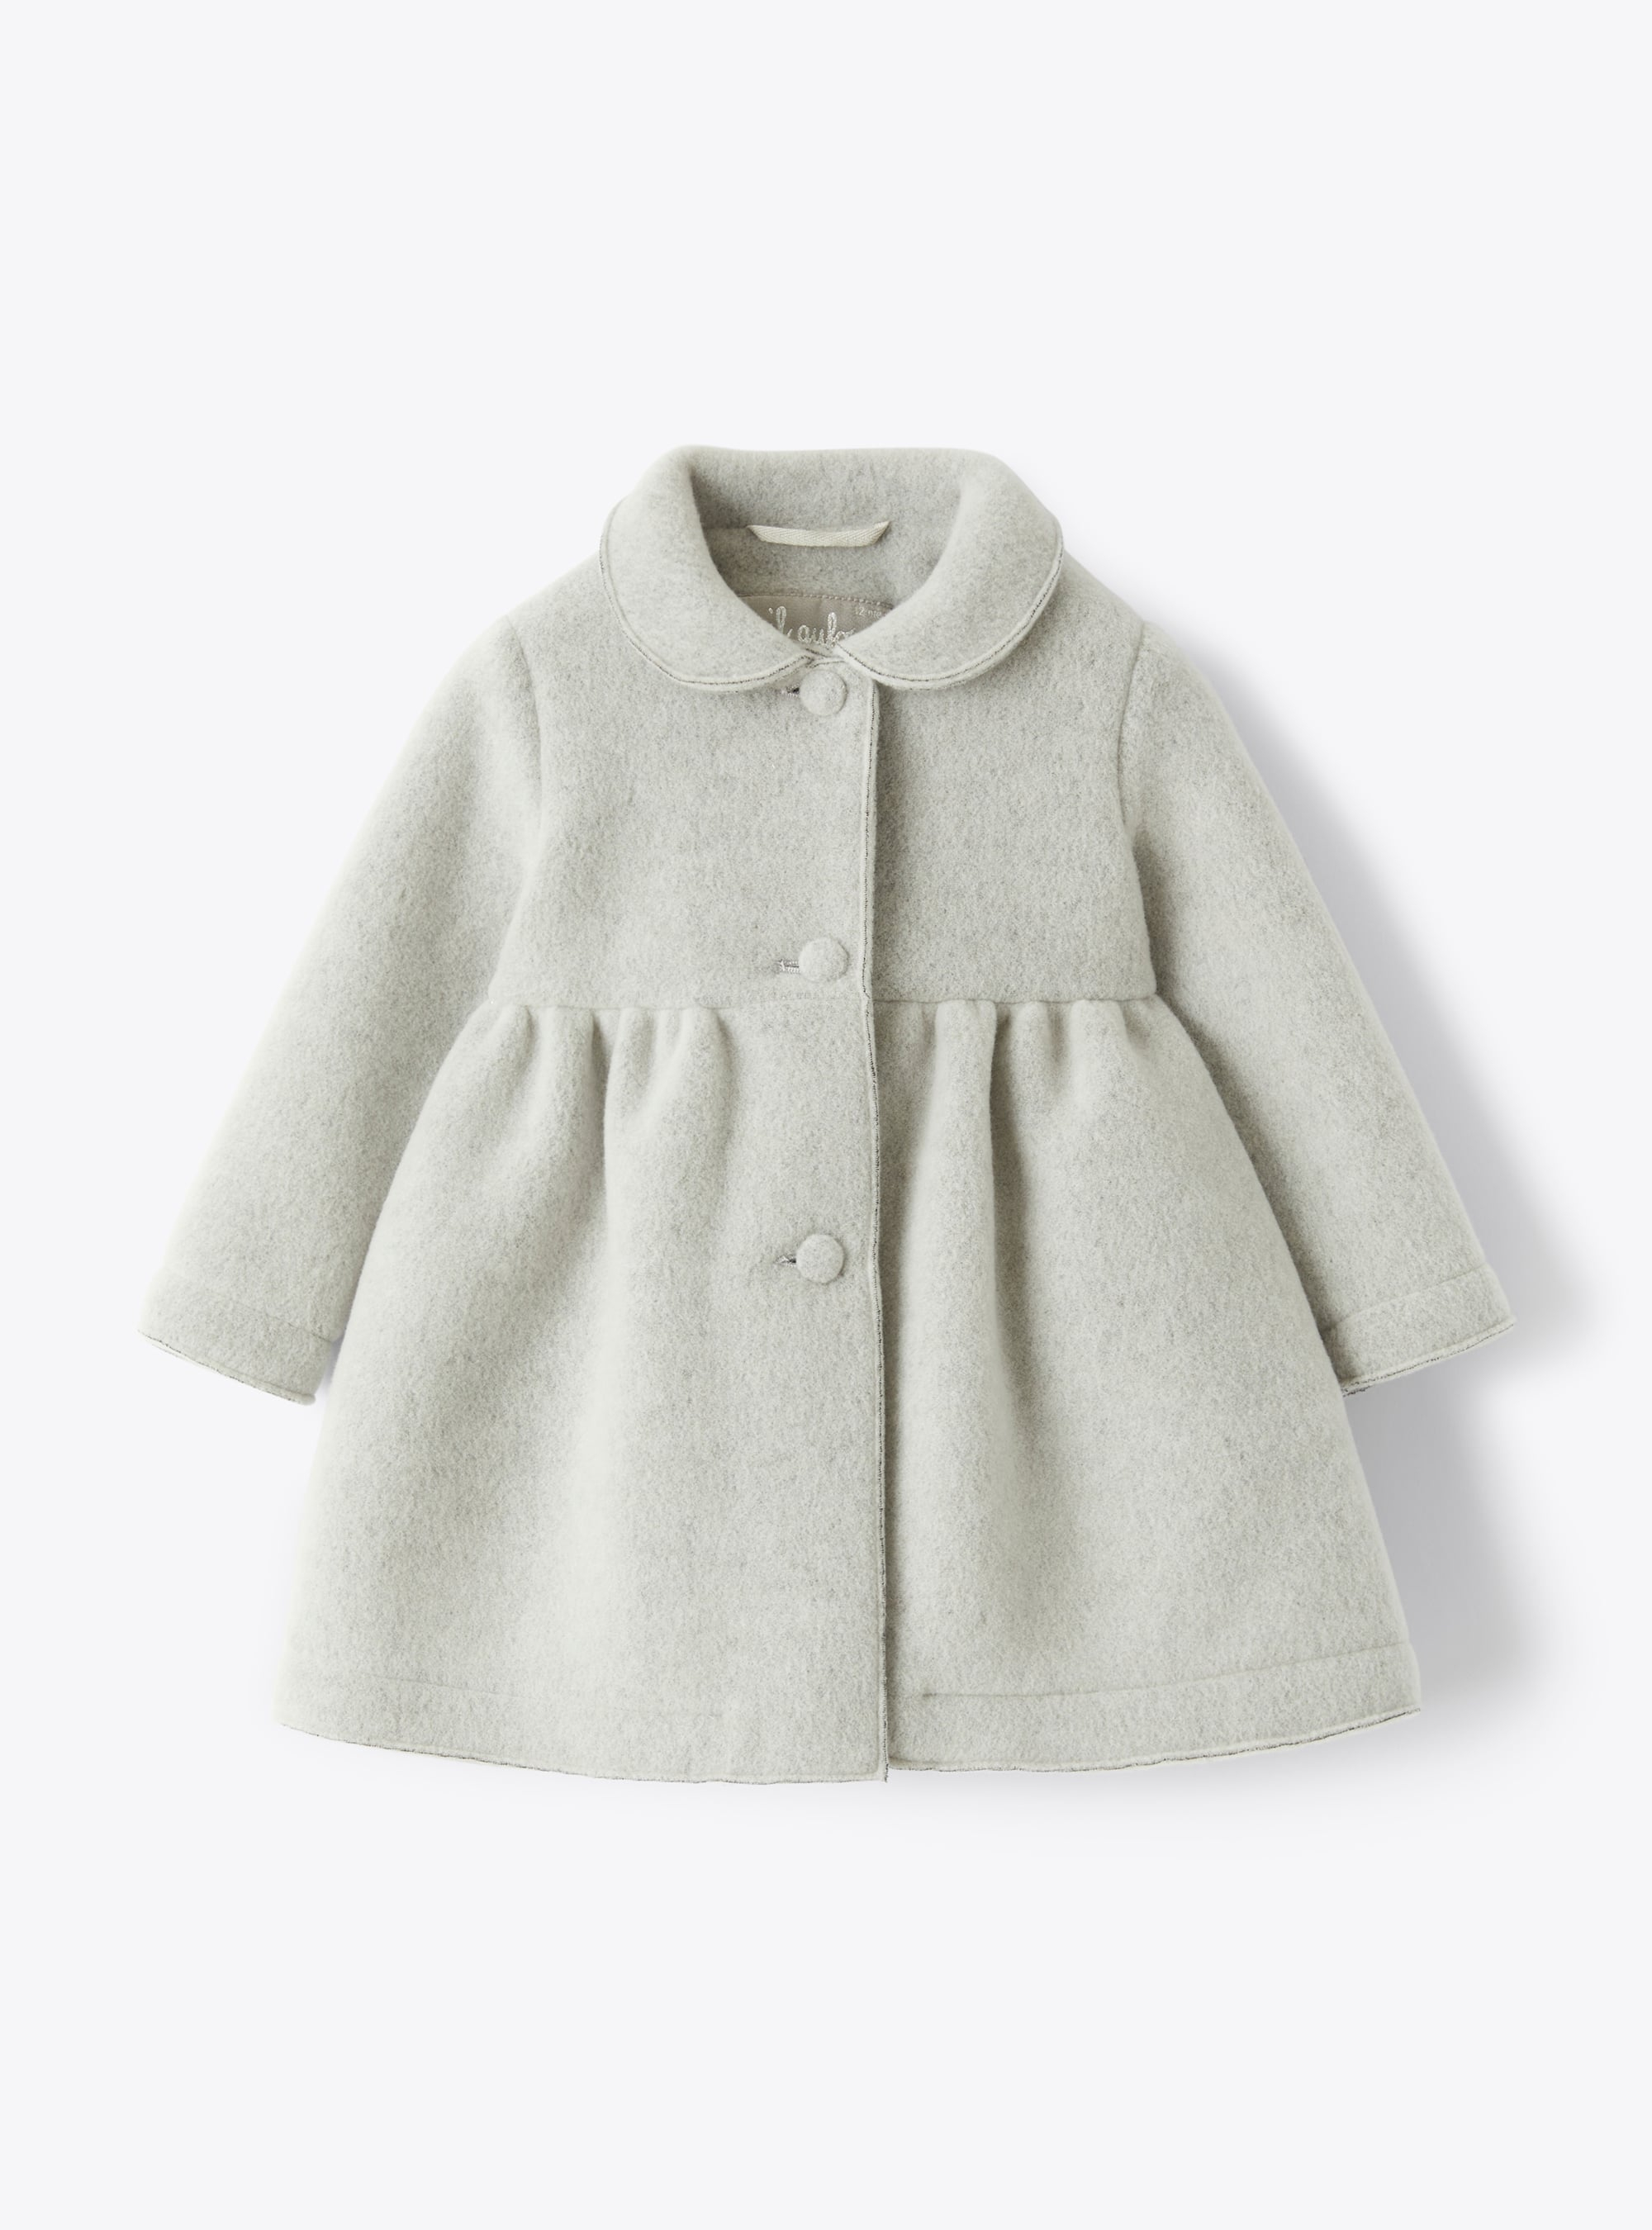 Mantel aus Couture-Fleece in Grau - Daunenjacke - Il Gufo